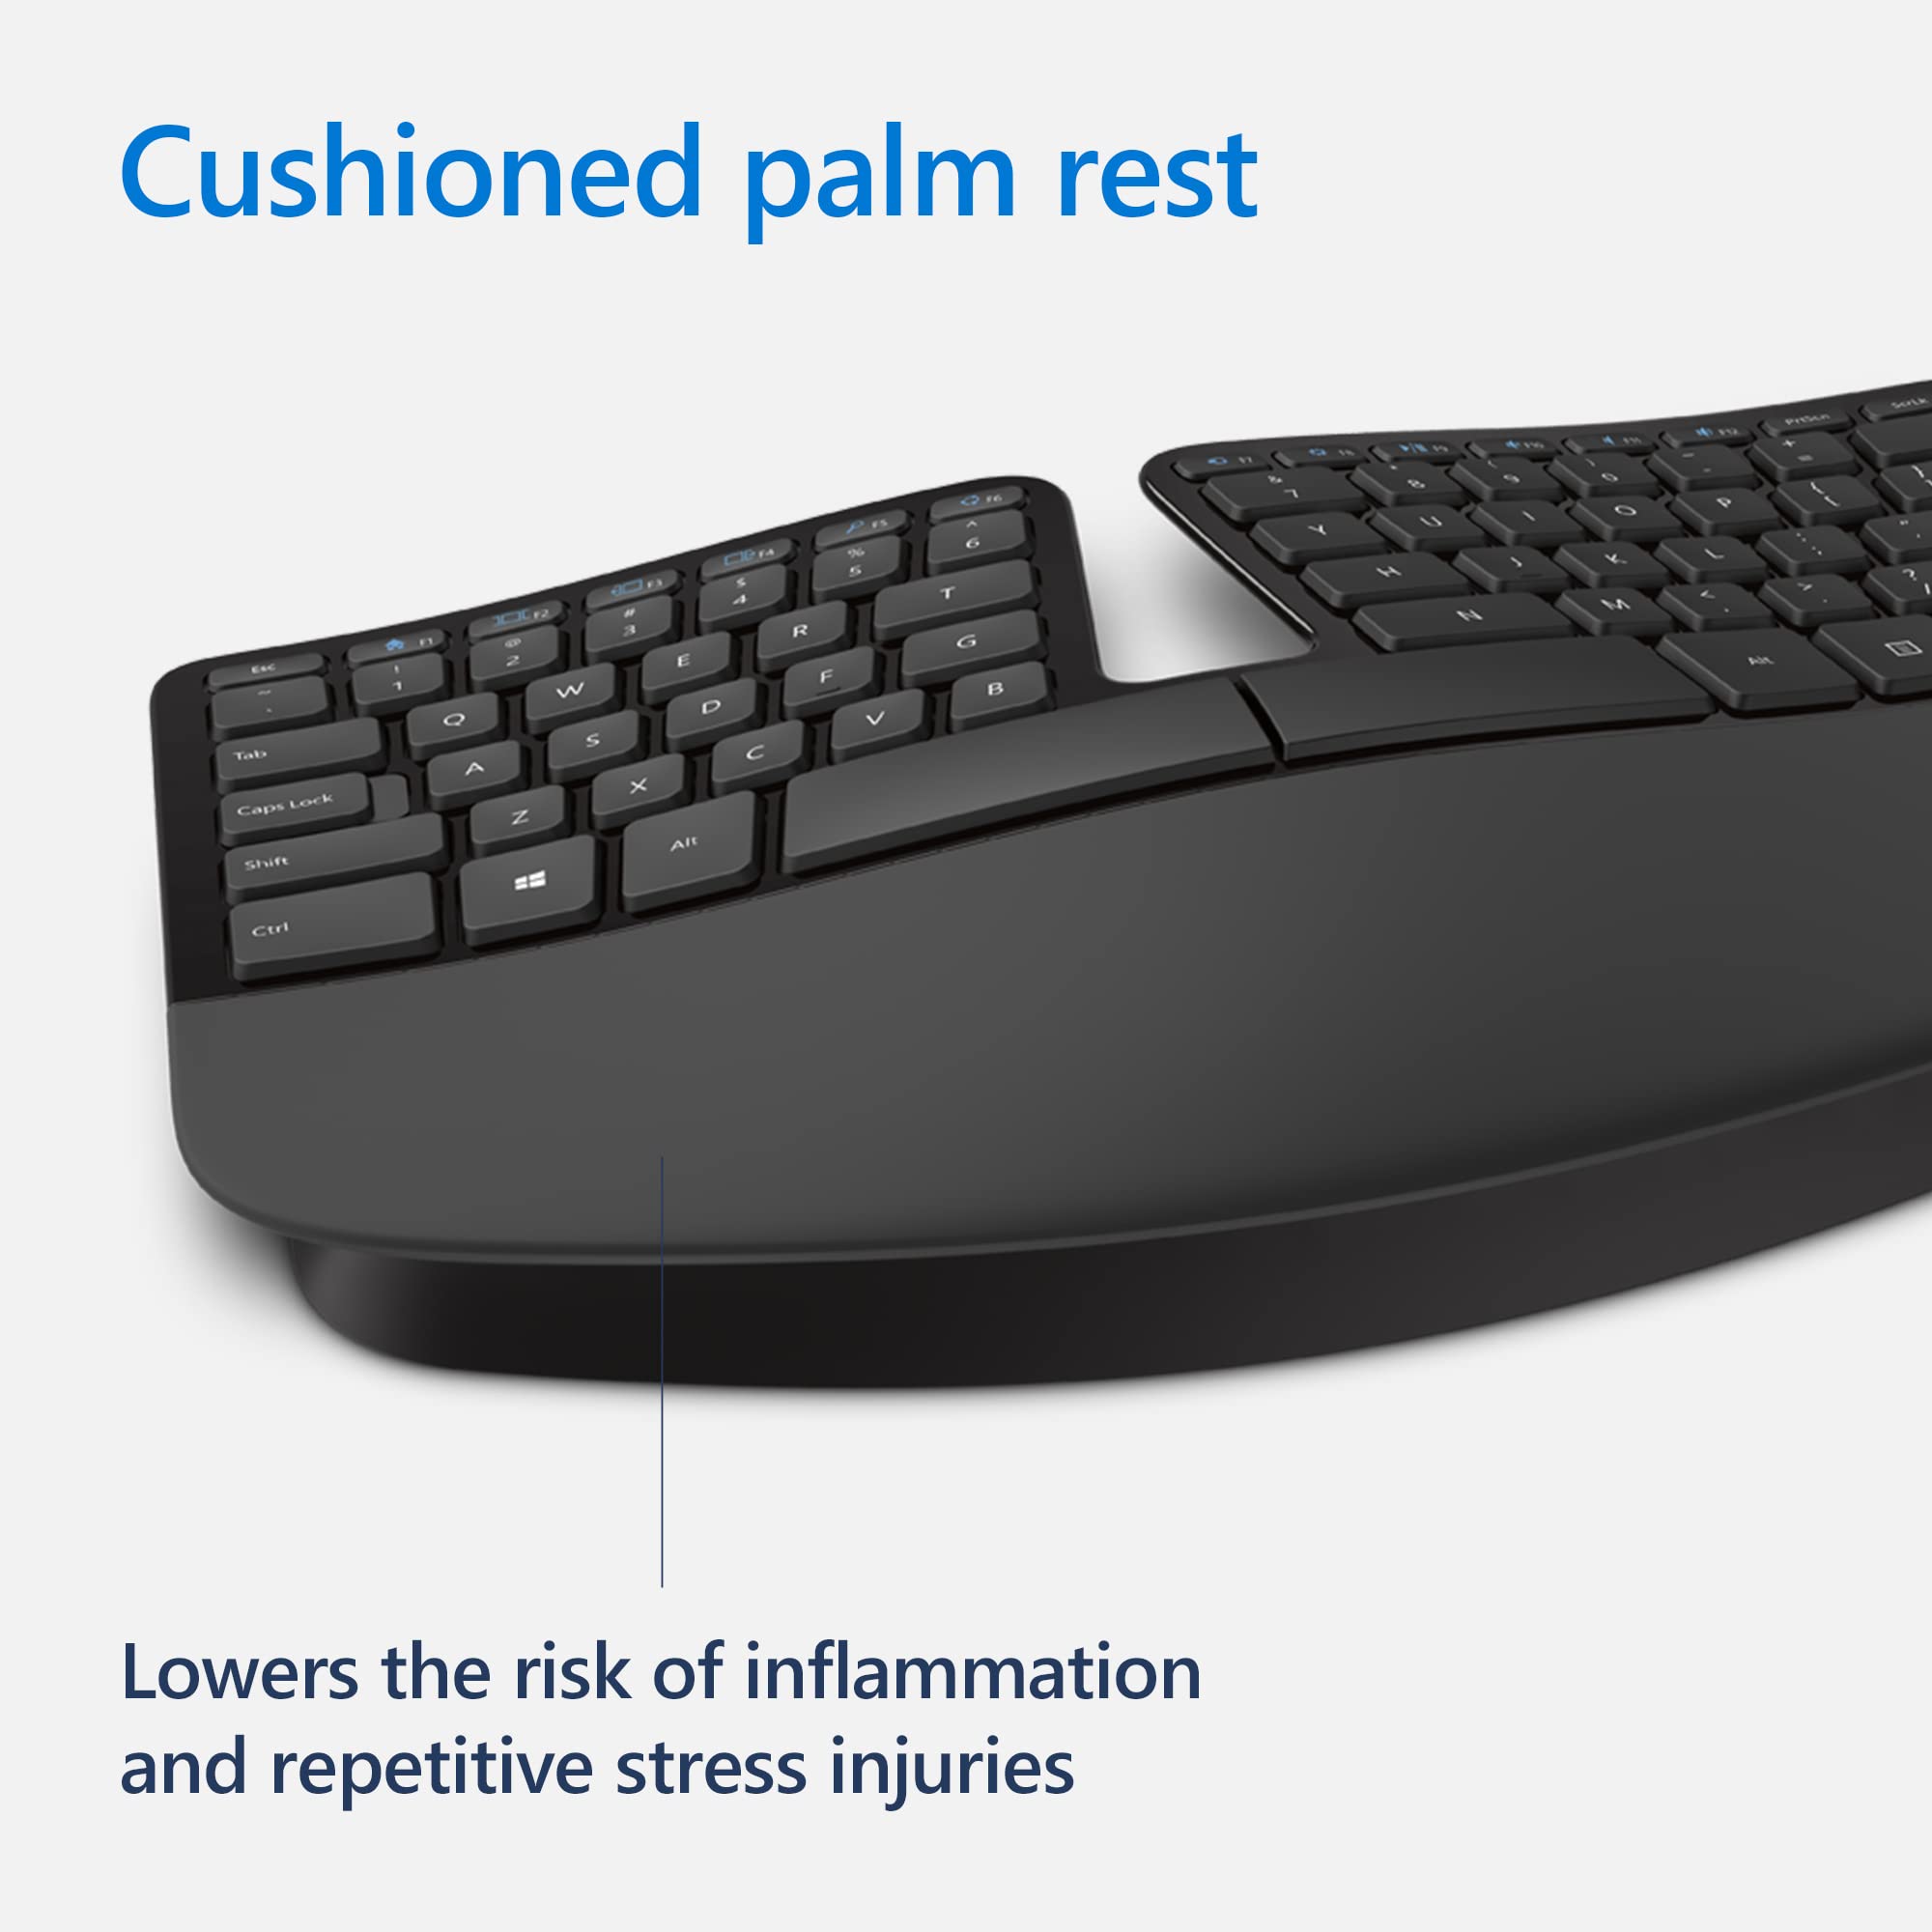 Microsoft Sculpt Ergonomic Wireless Desktop Keyboard and Mouse - Black. Wireless , Comfortable, Ergonomic Keyboard and Mouse Combo with Split Design and Palm Rest.